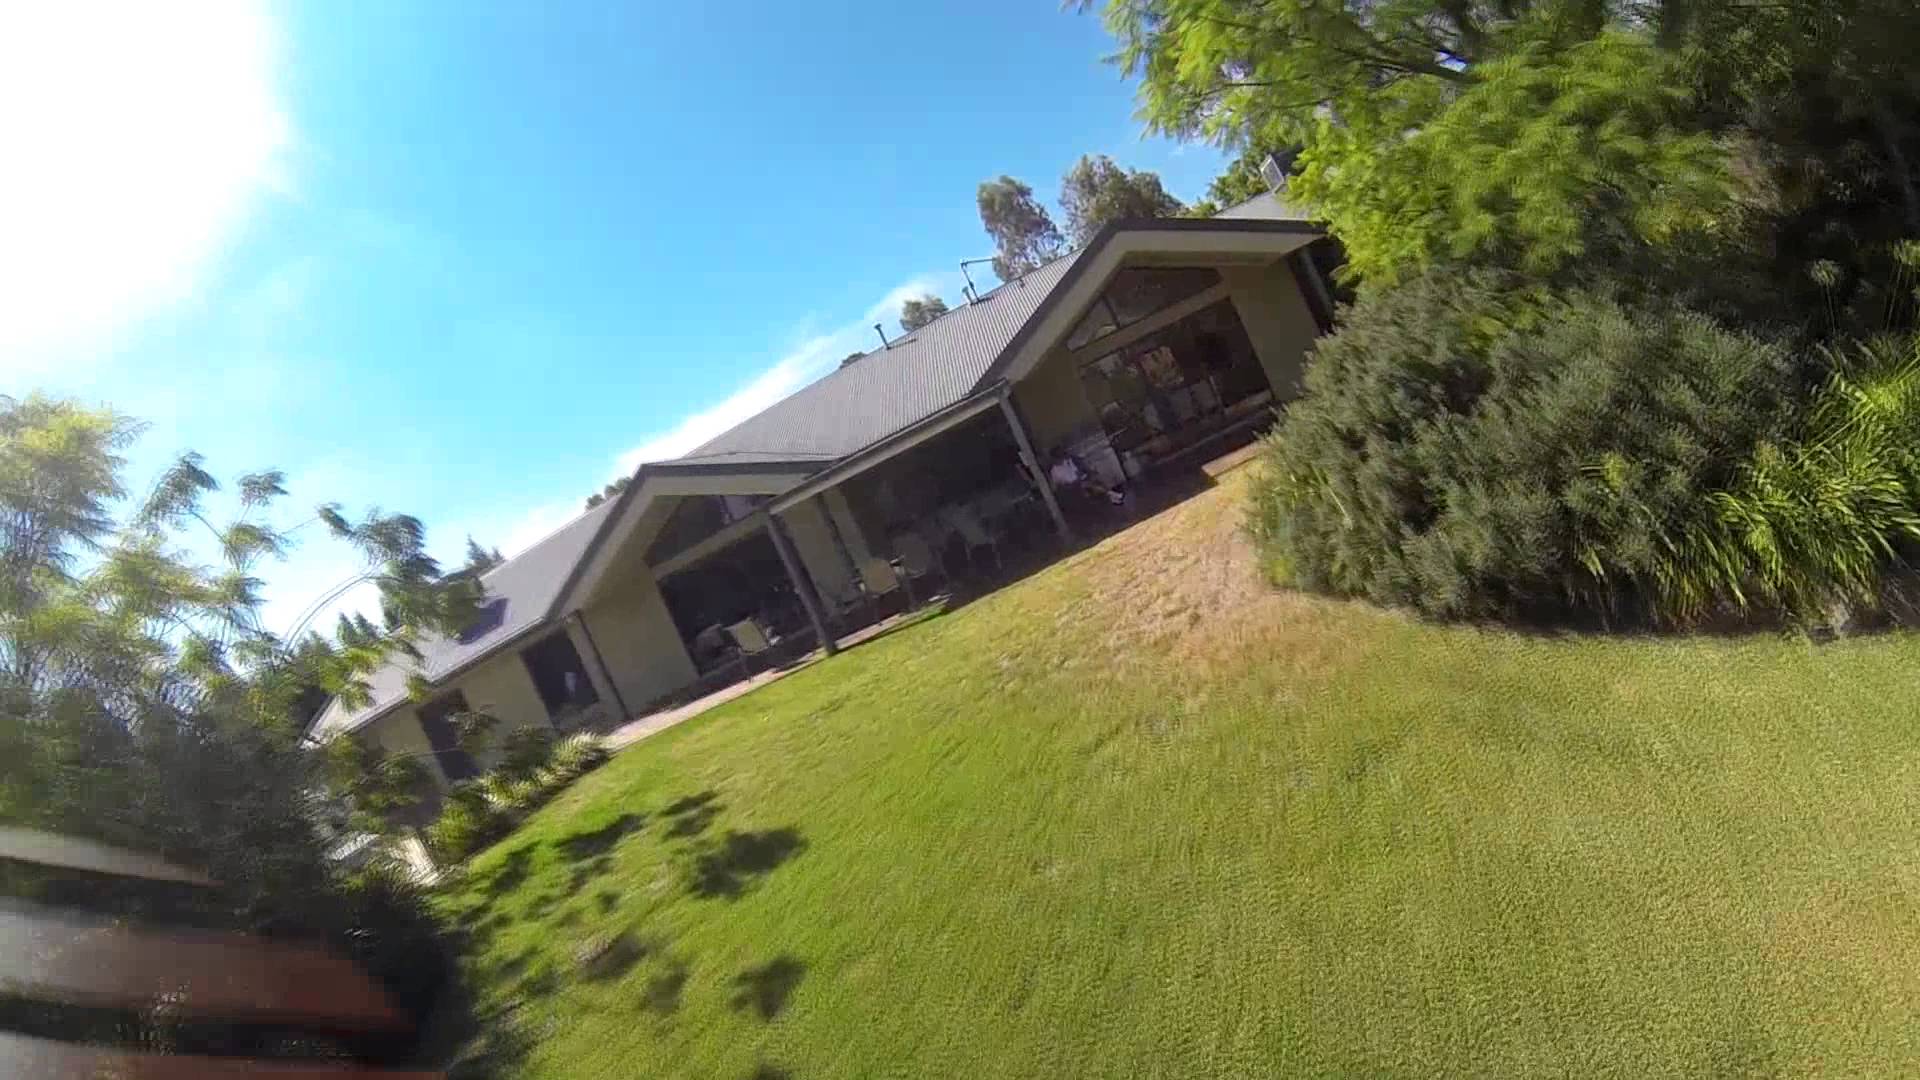 Backyard FPV Racing drone